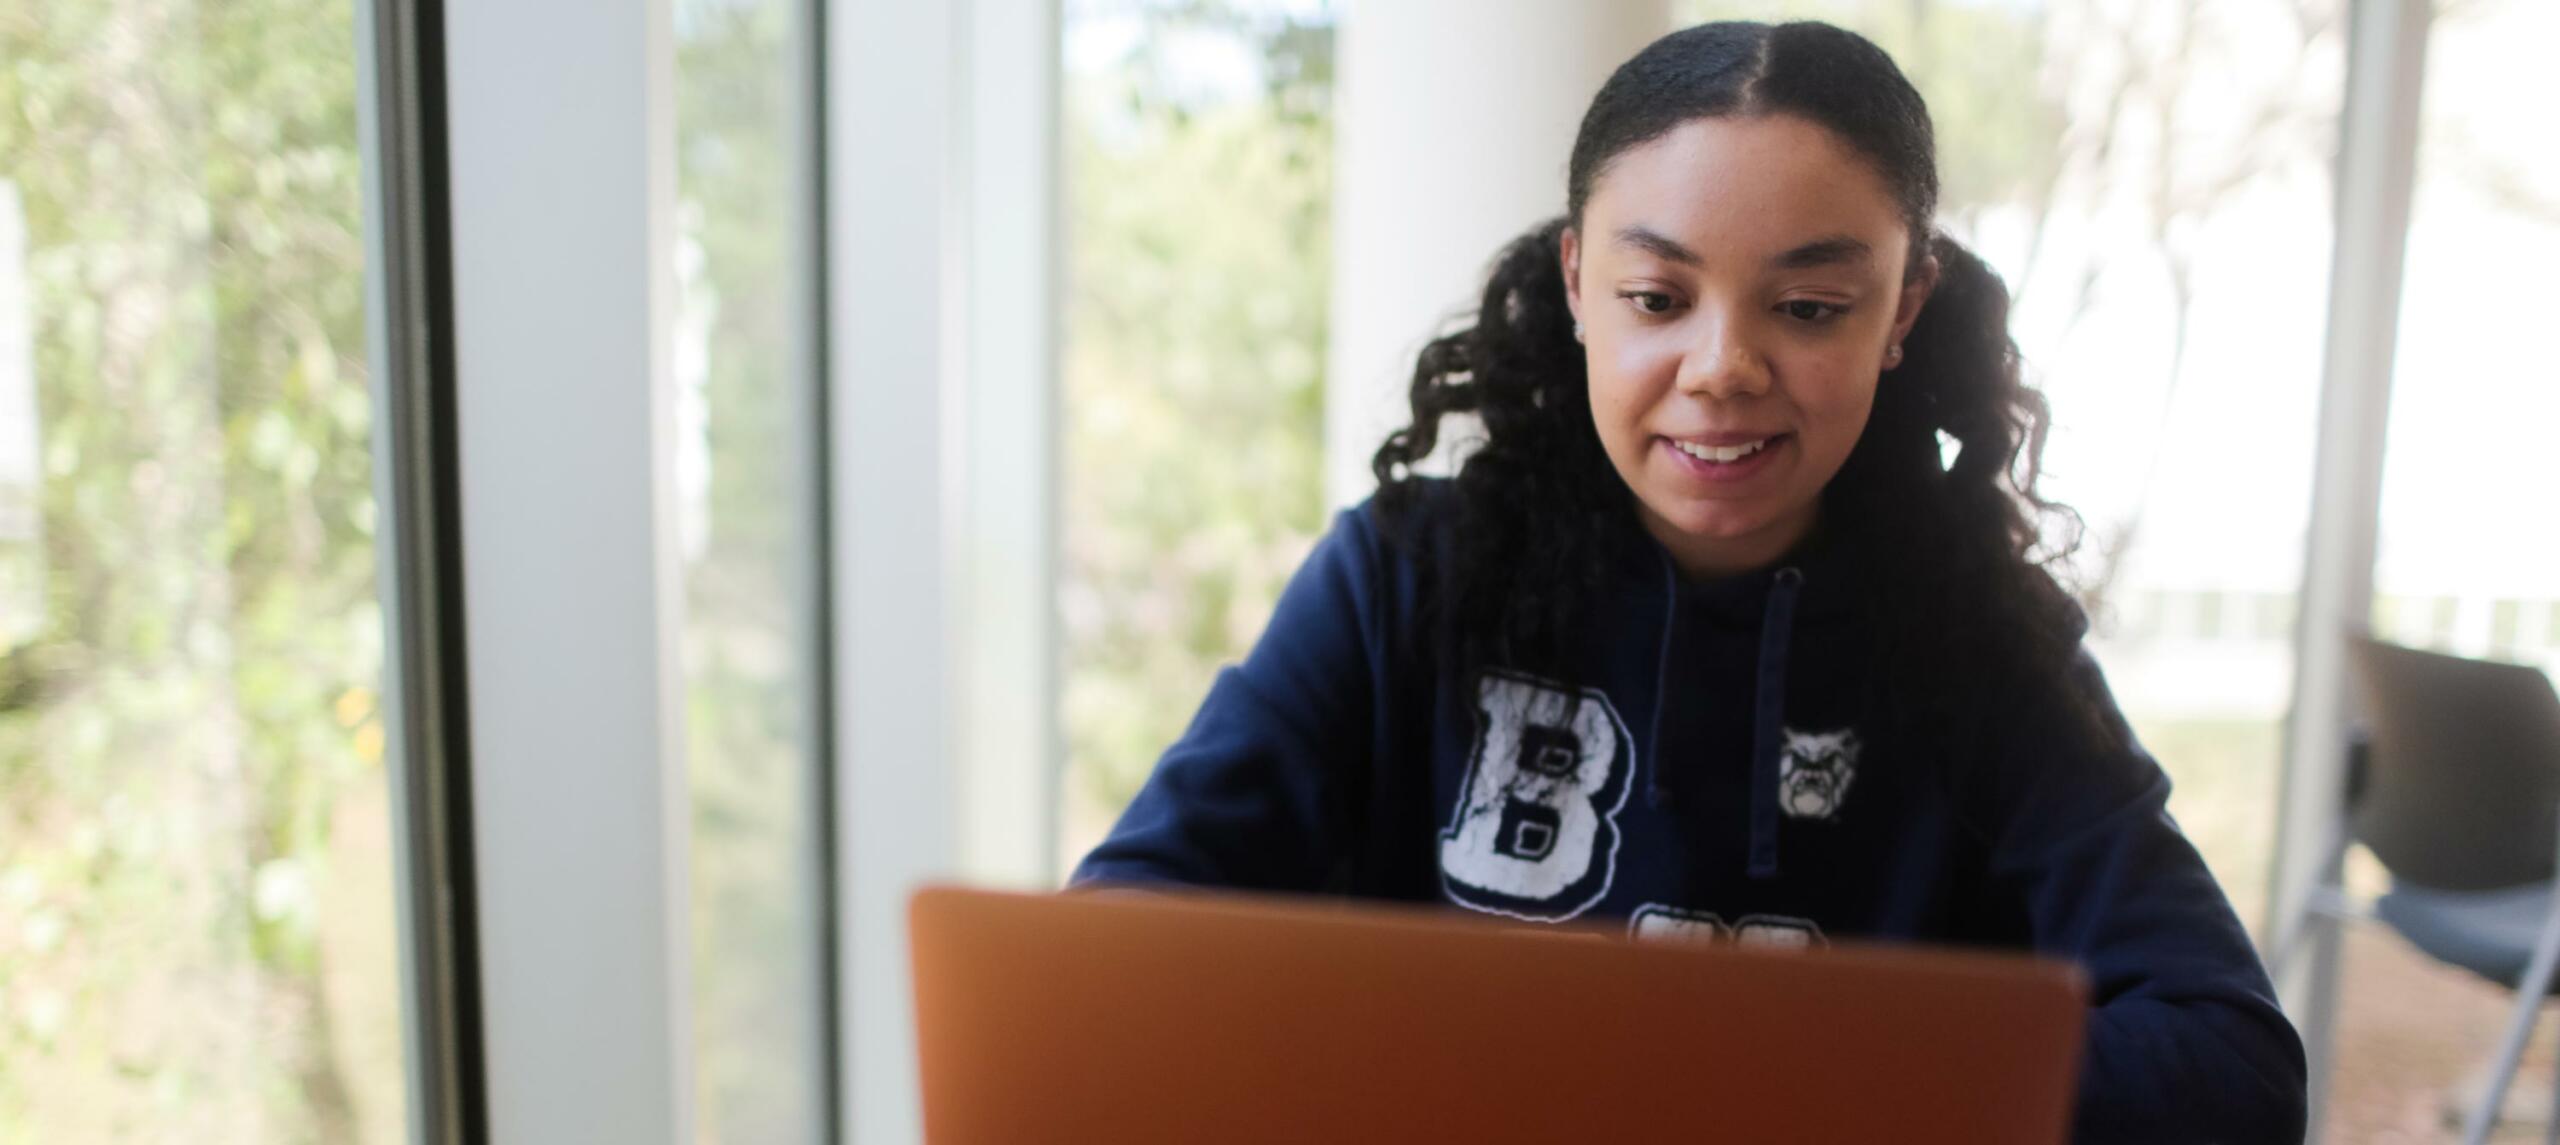 Student in Butler sweatshirt looks at laptop